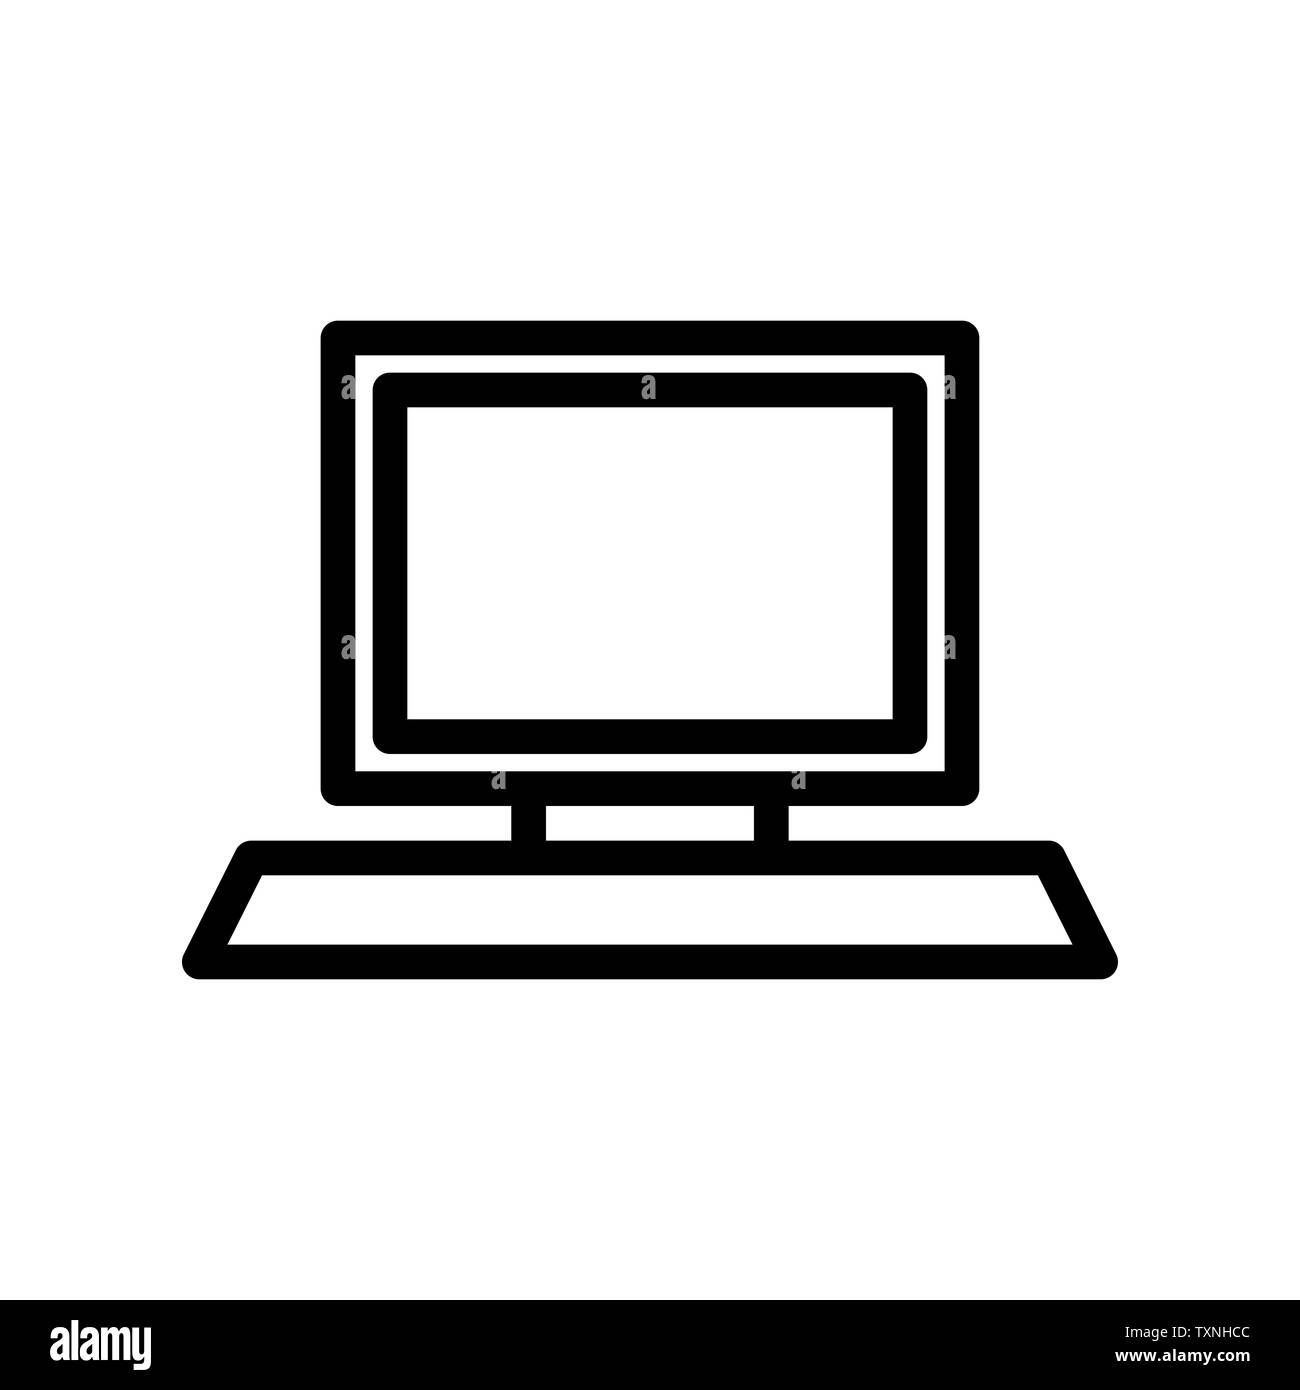 monitor desktop computer logo or icon illustration Stock Photo - Alamy